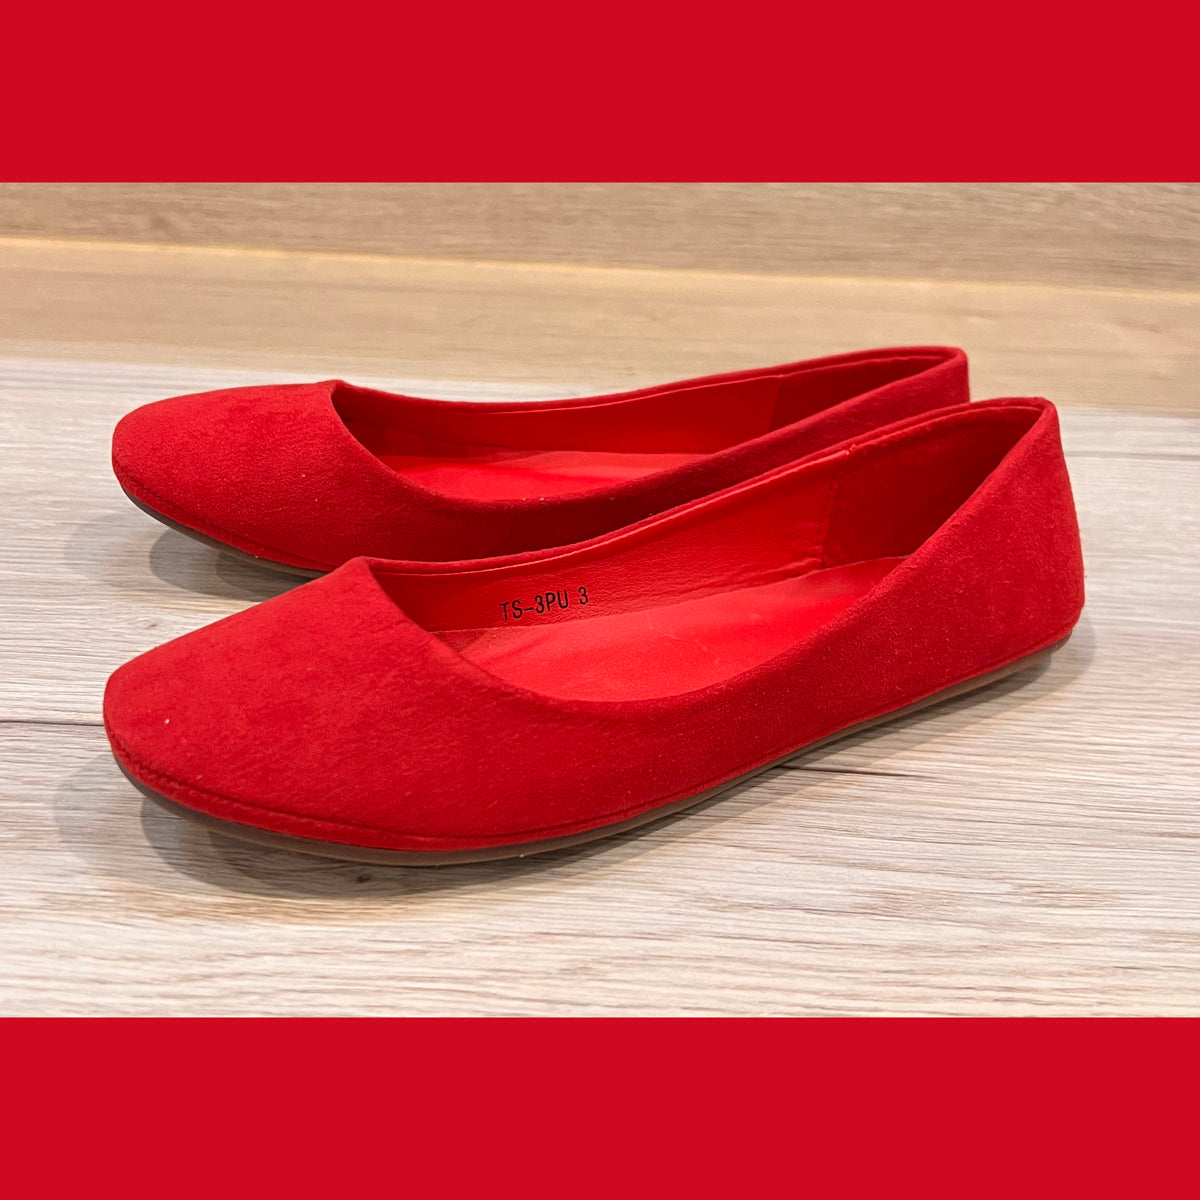 Red Suede Flat plain ballerina shoes / pumps